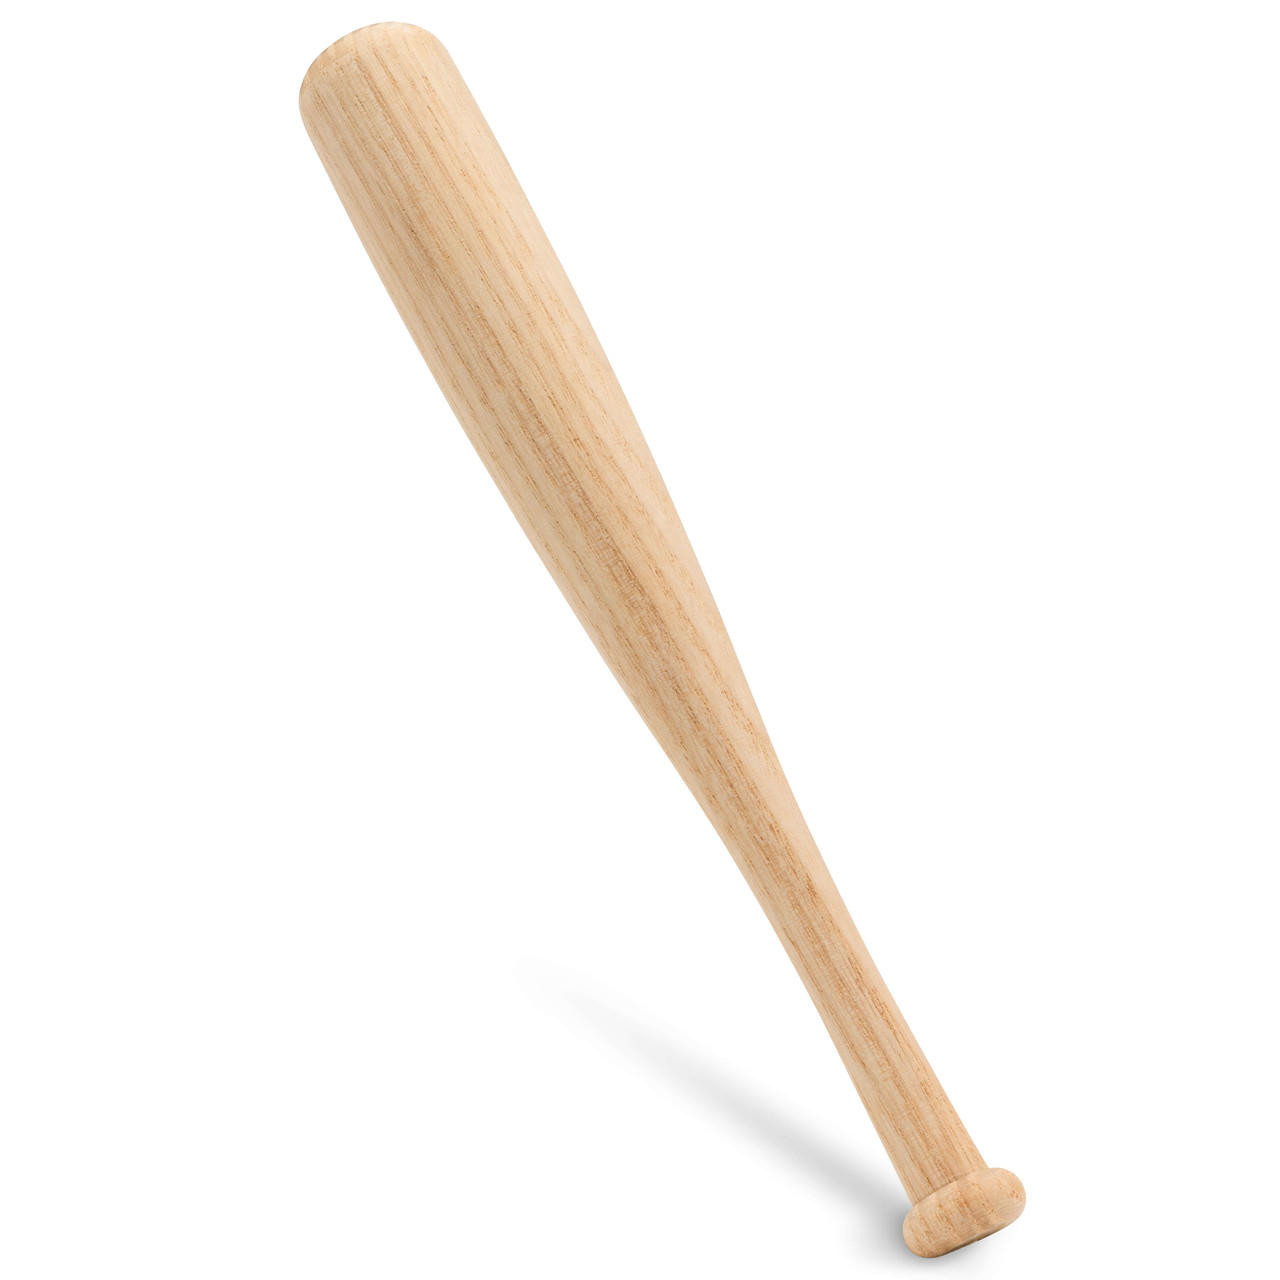 The Strongest Wood Baseball Bats